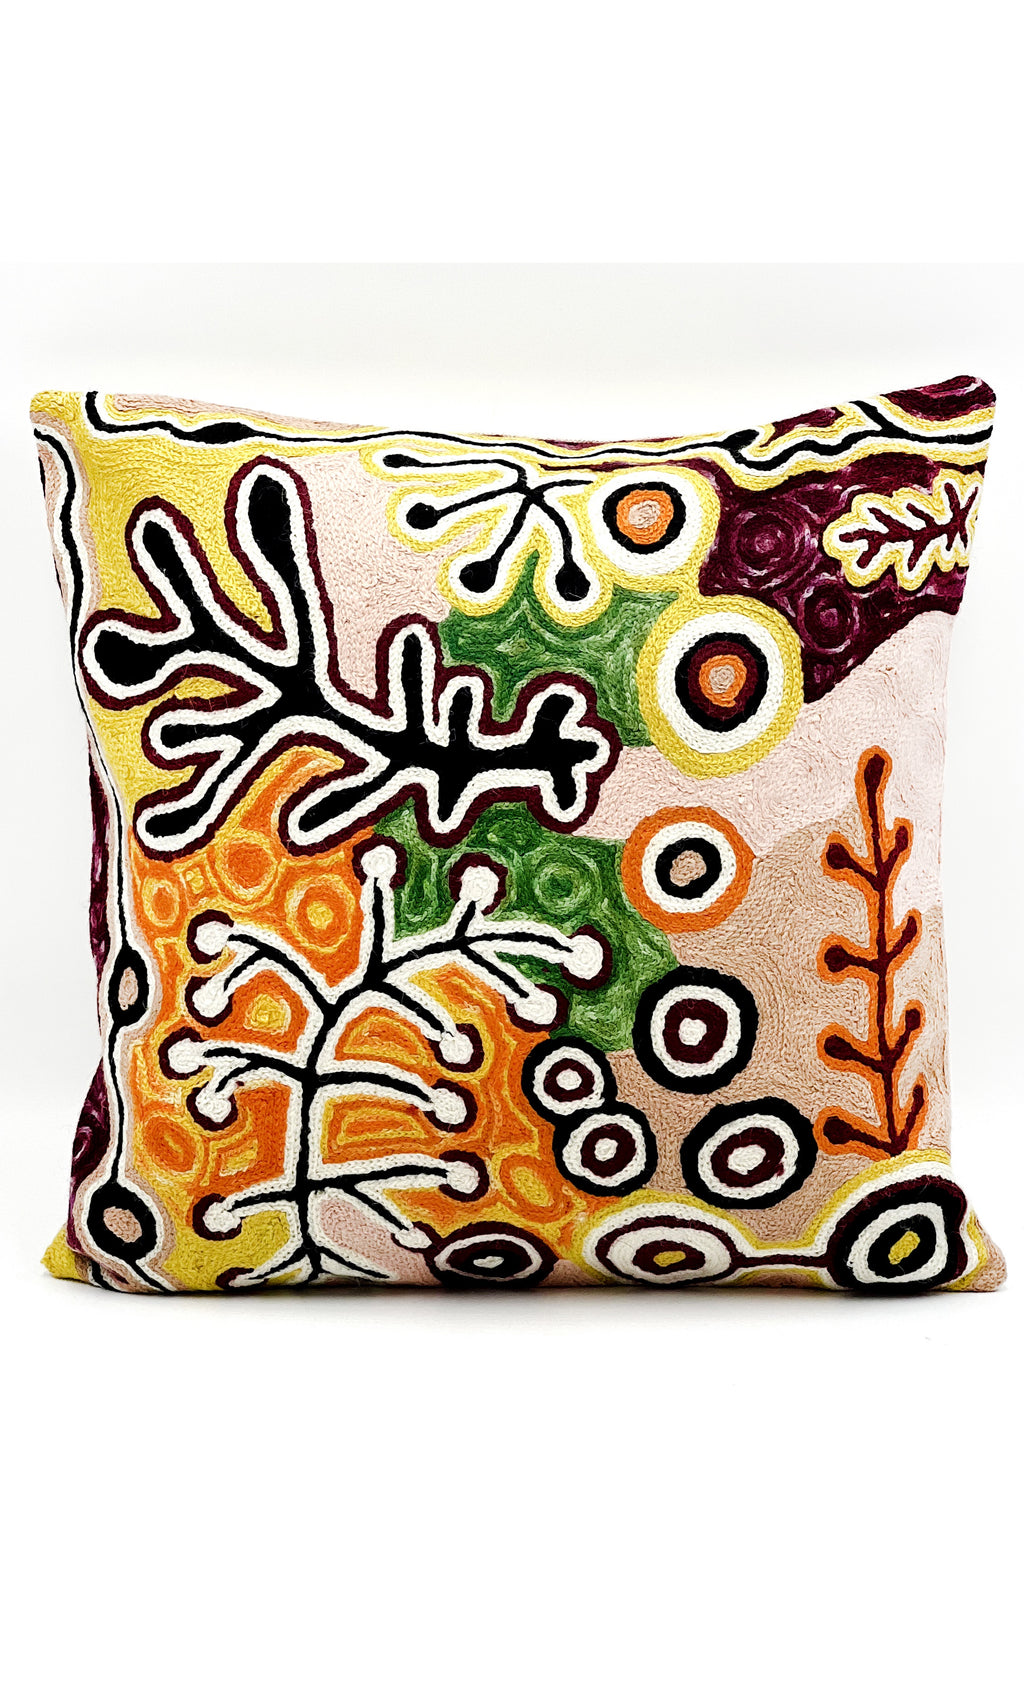 Aboriginal Art Cushion Cover by Paddy Stewart (2)